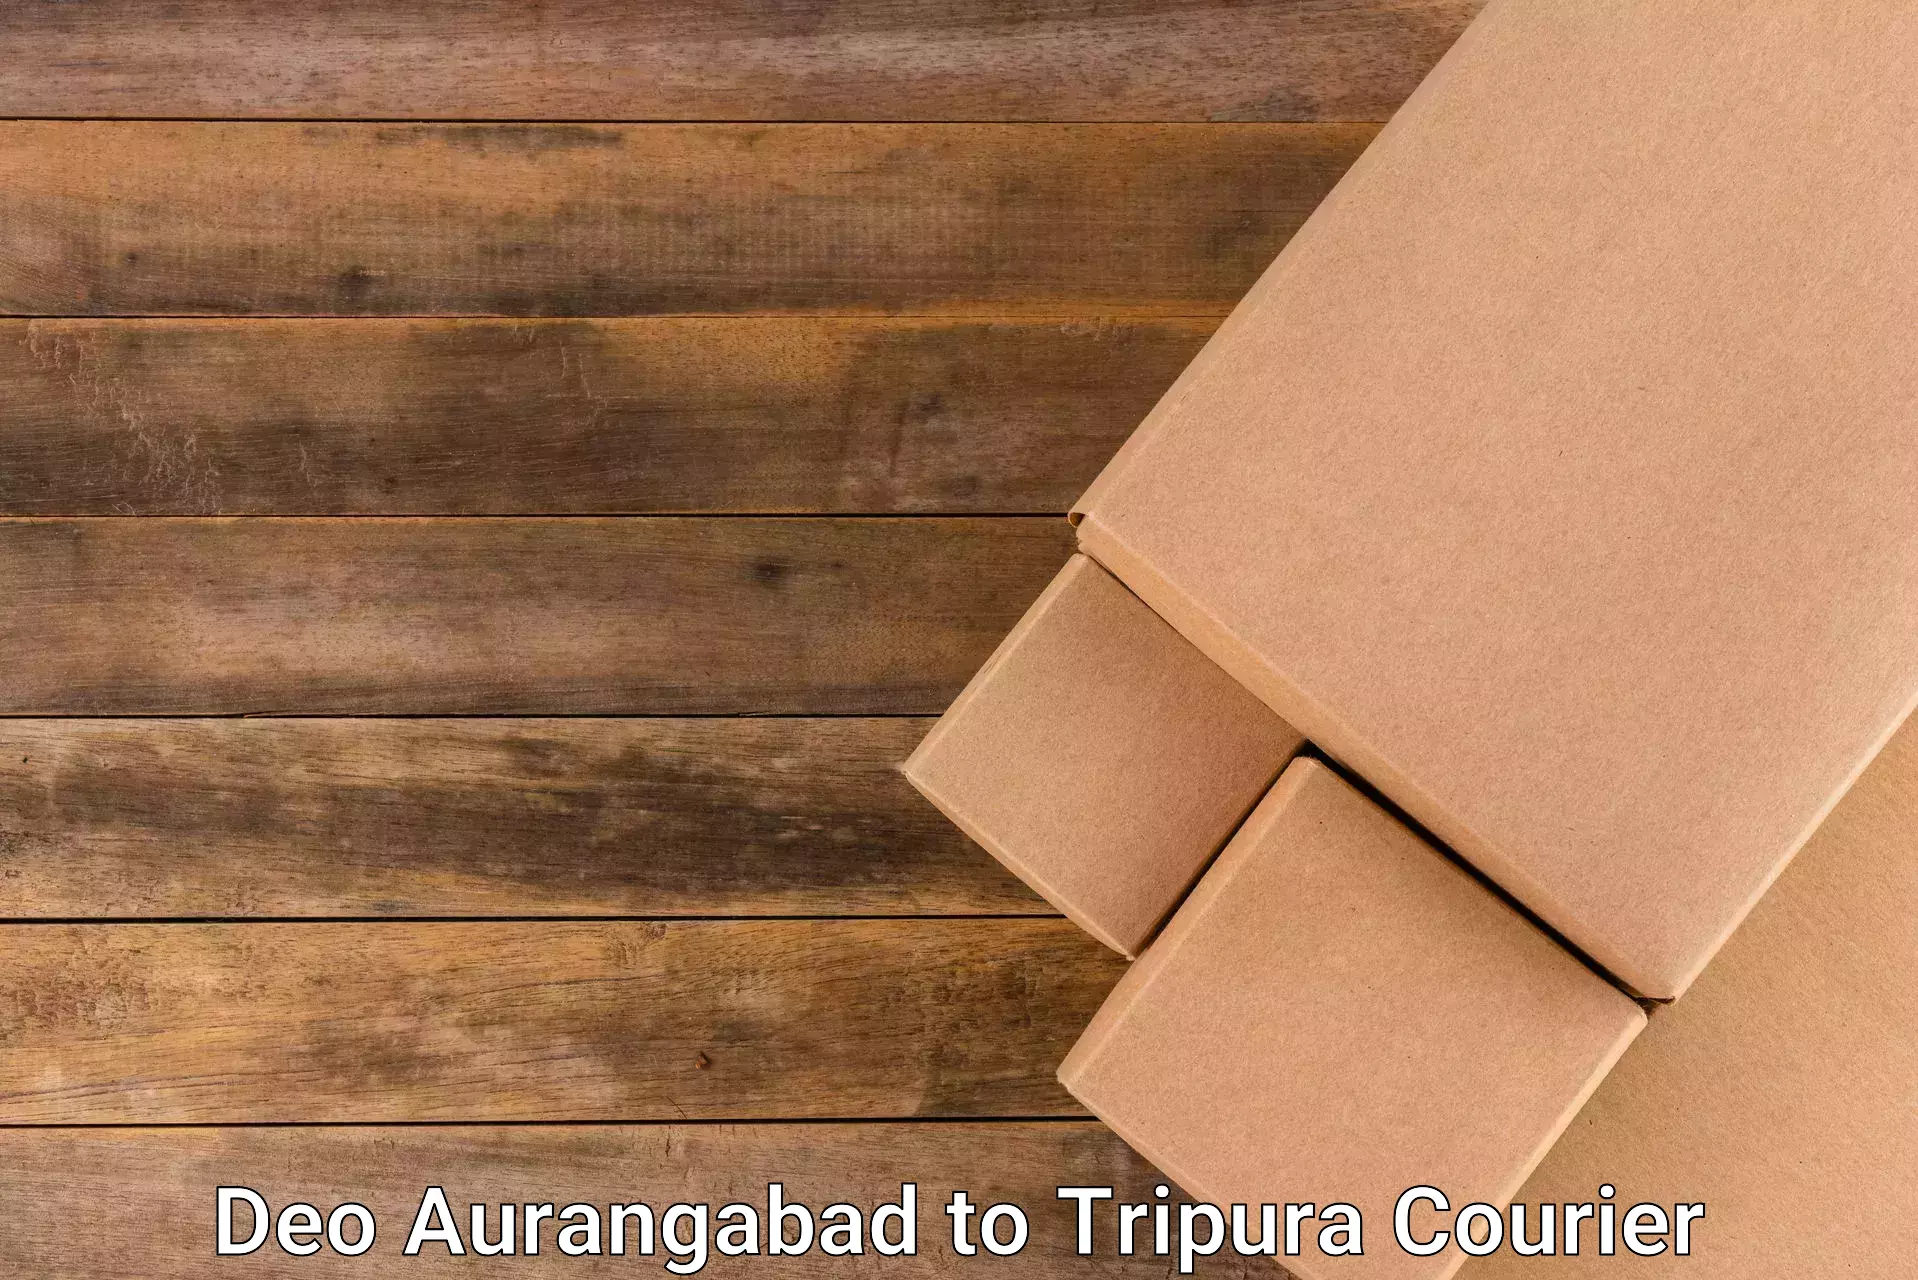 Parcel service for businesses Deo Aurangabad to Tripura